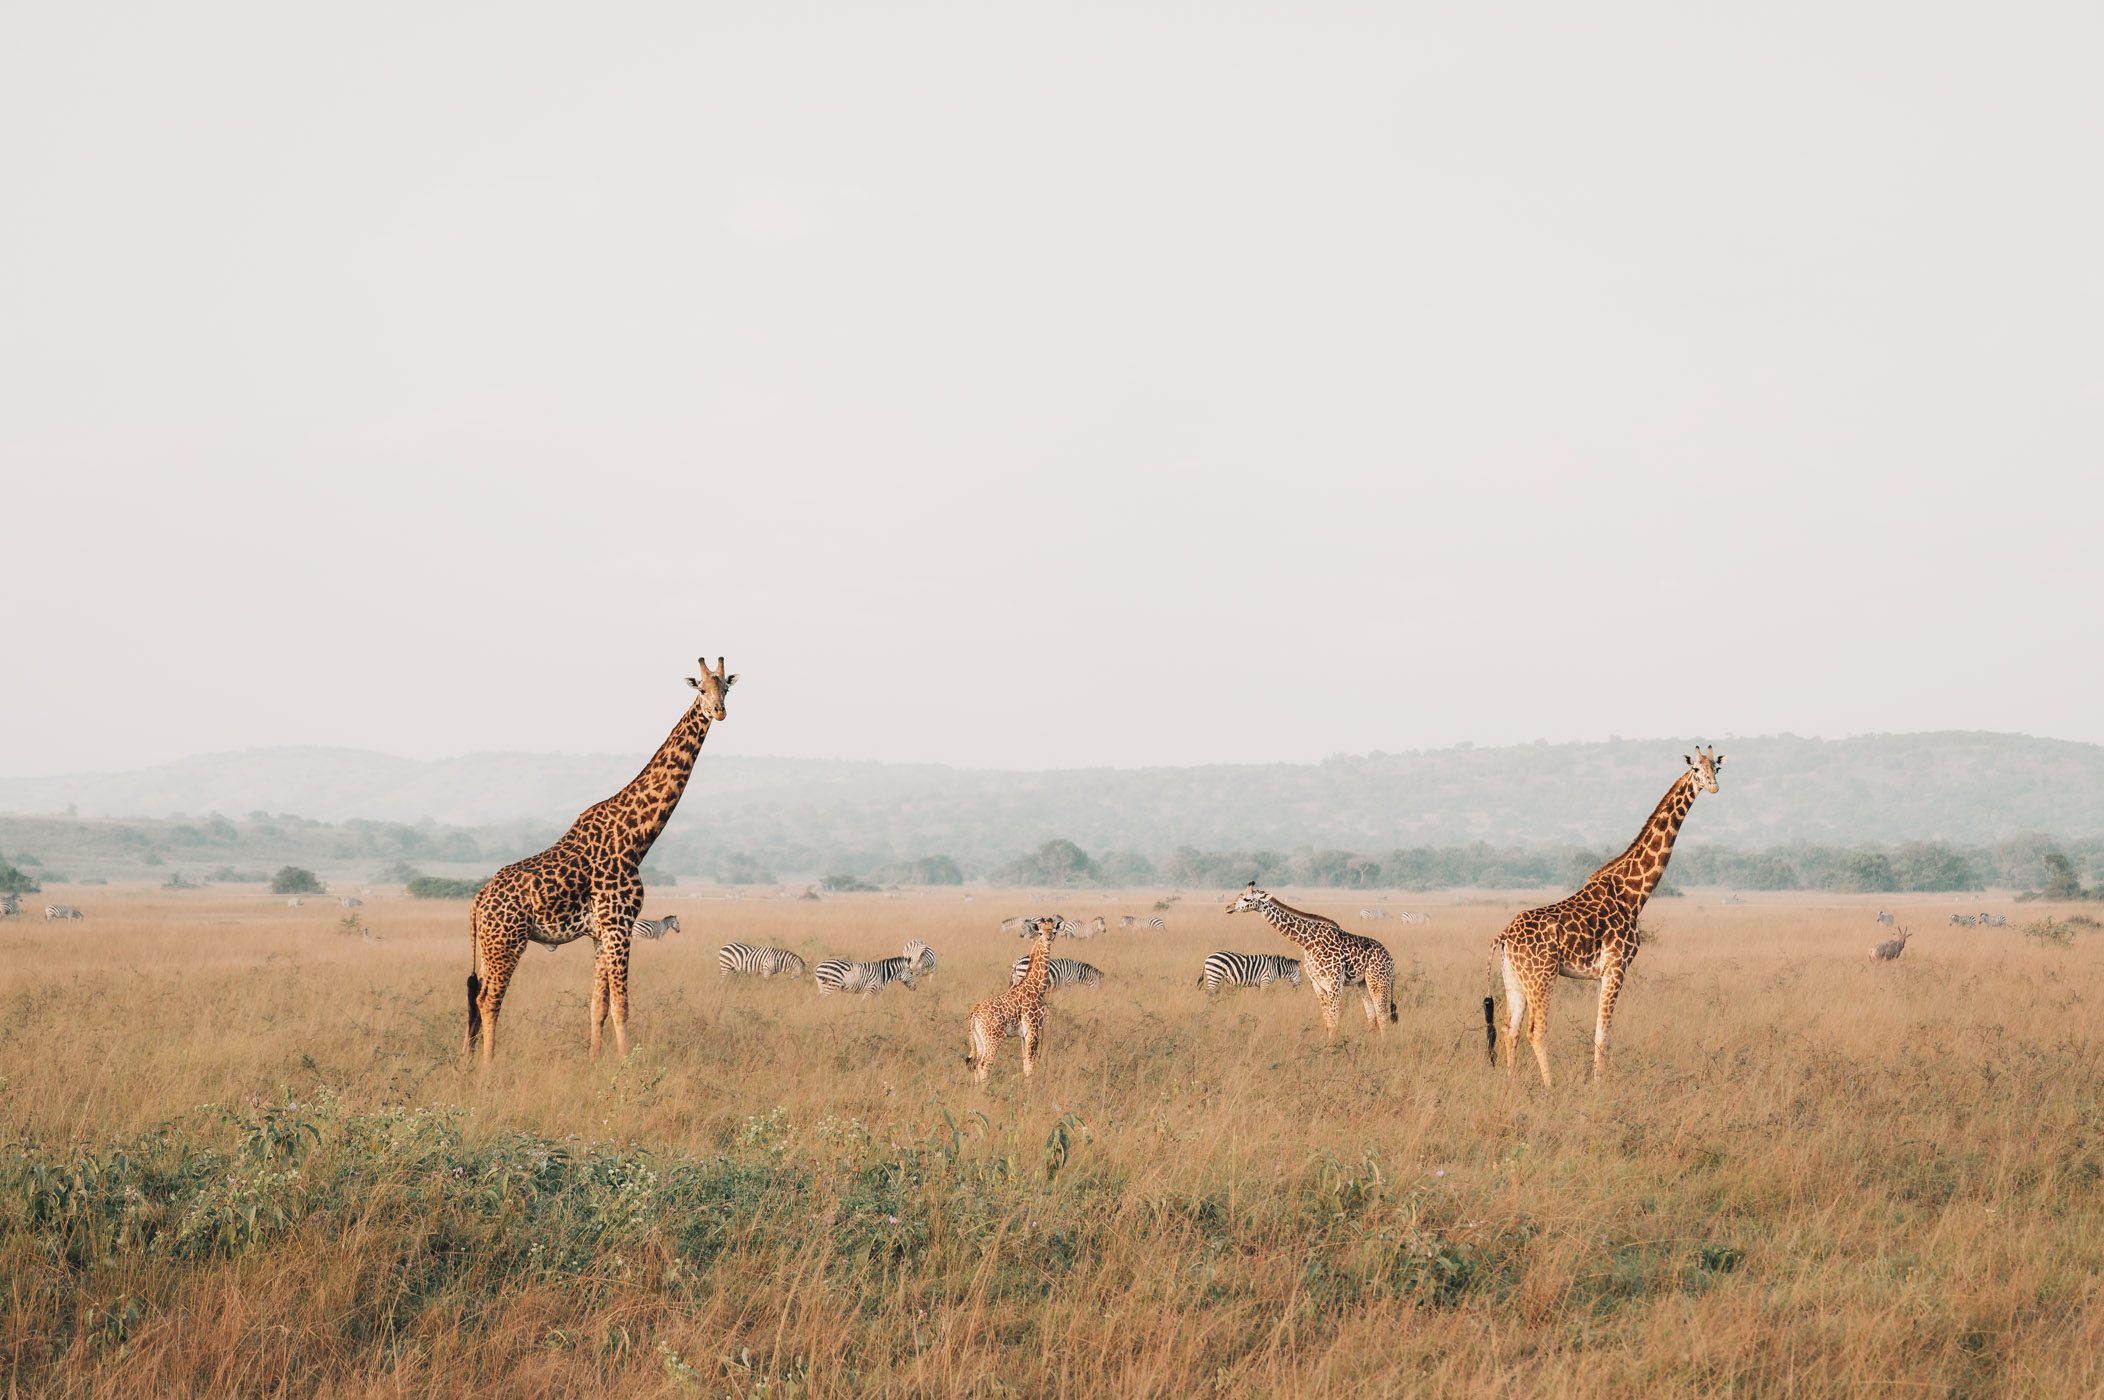 Giraffes and zebras in Akagera National Park in Rwanda